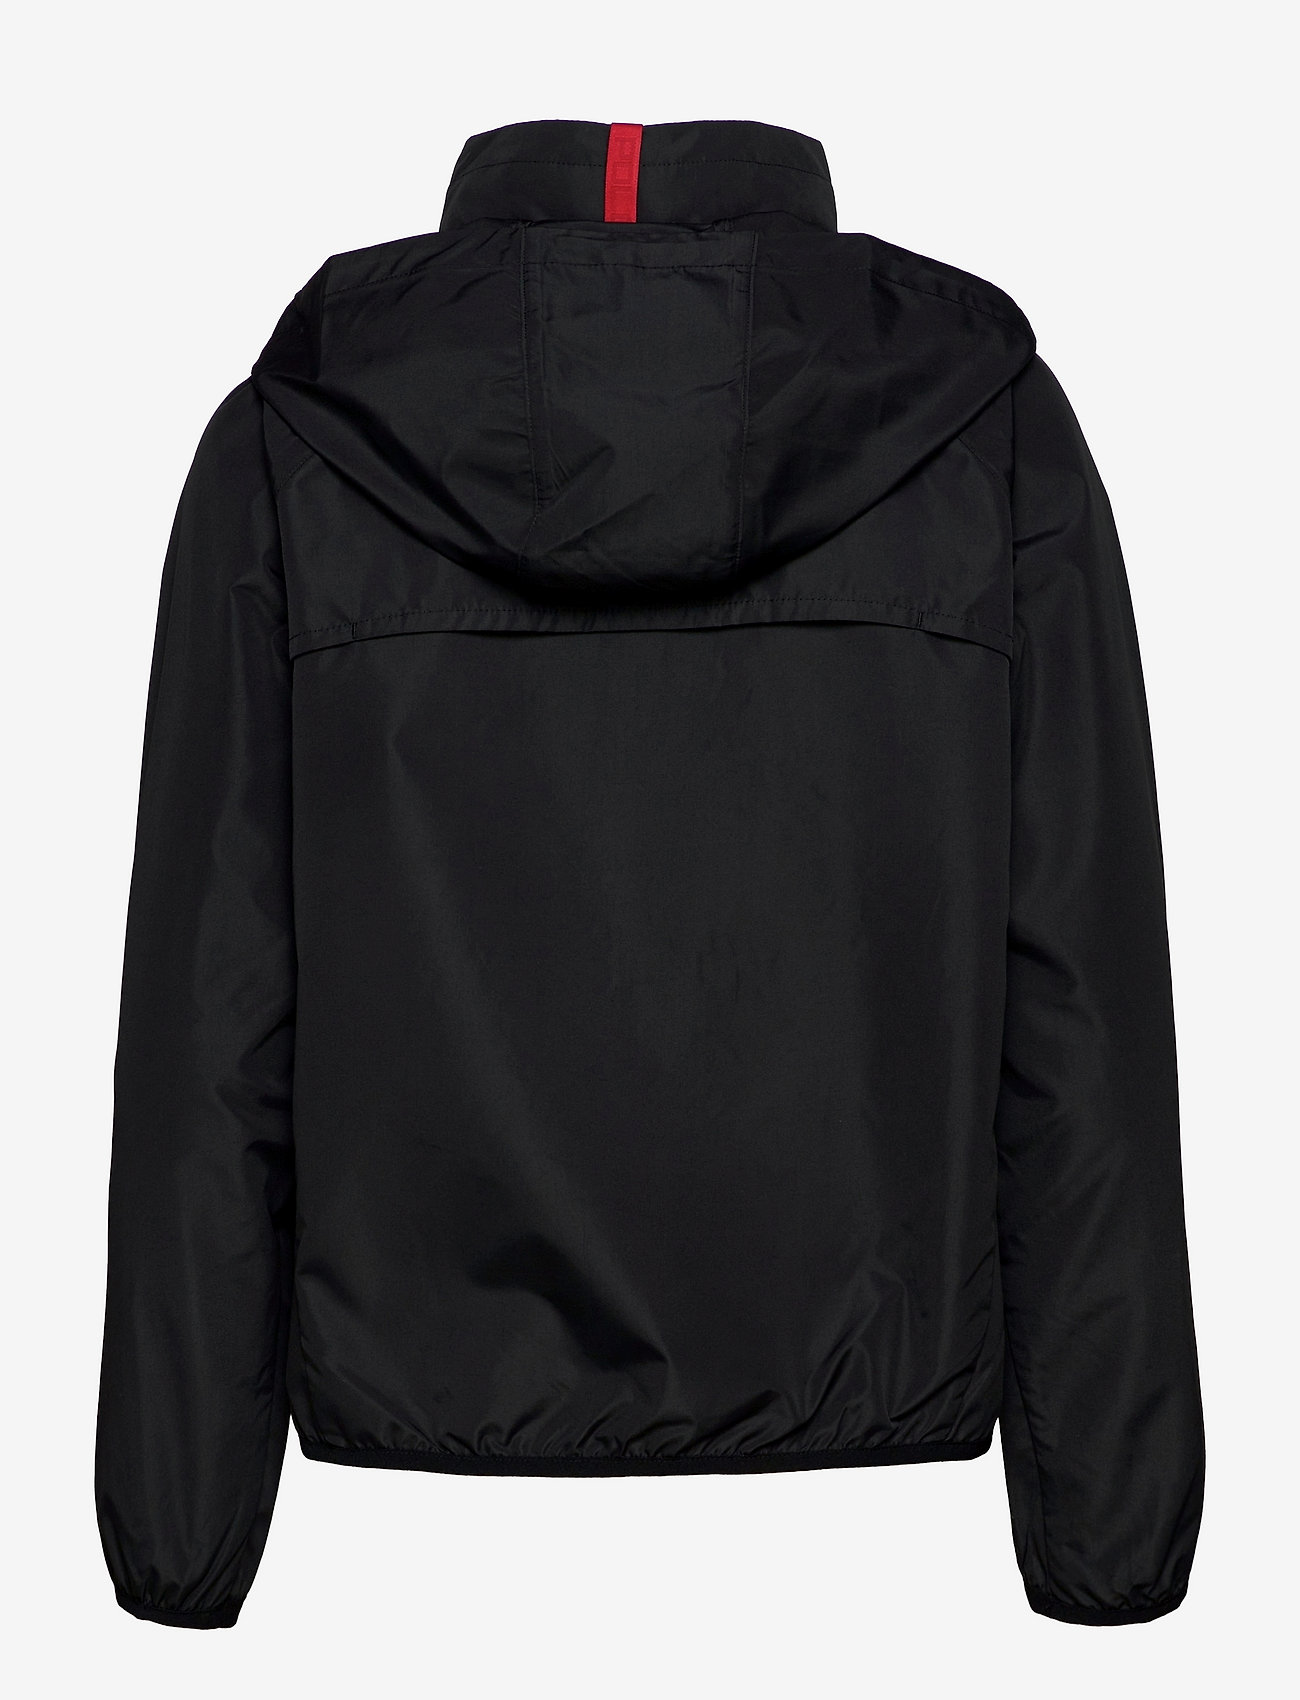 Polo Ralph Lauren - Water-Repellent Hooded Windbreaker - light jackets - polo black - 1